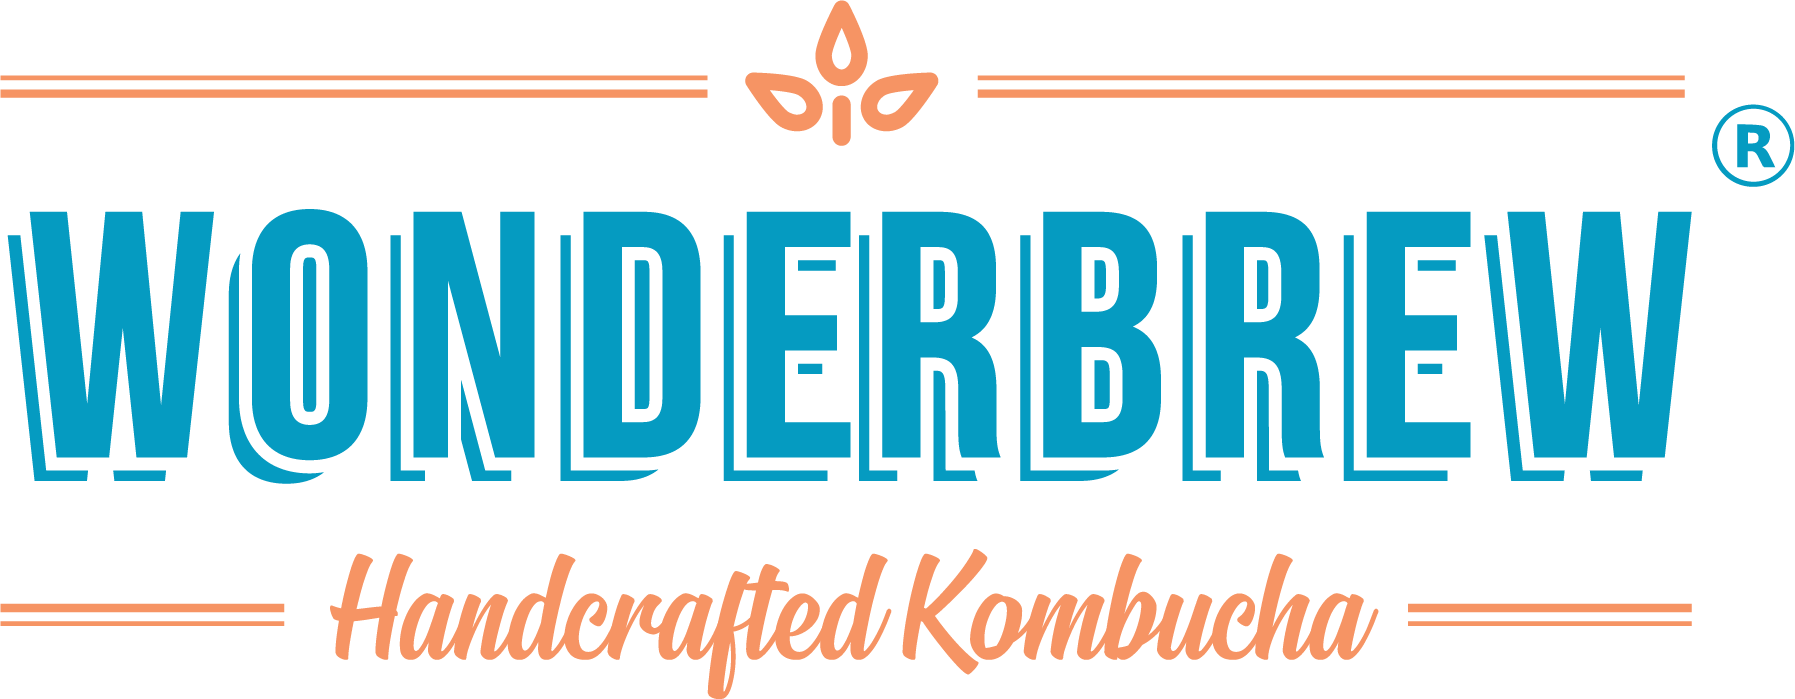 wonderbrew.co-logo